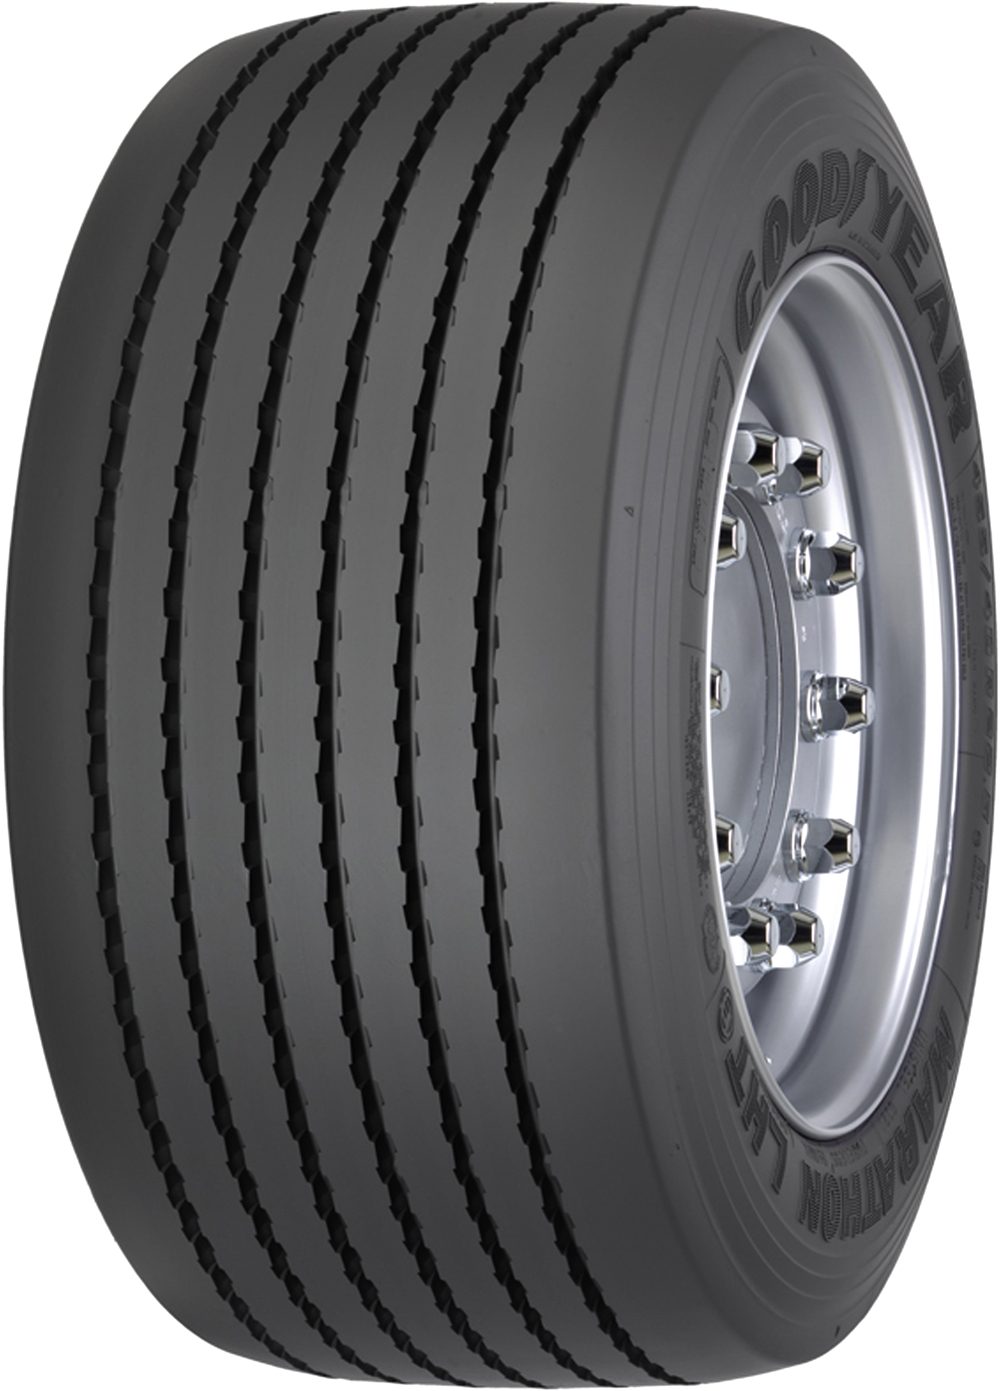 product_type-heavy_tires GOODYEAR MARATHON LHT+ 455/40 R22.5 J